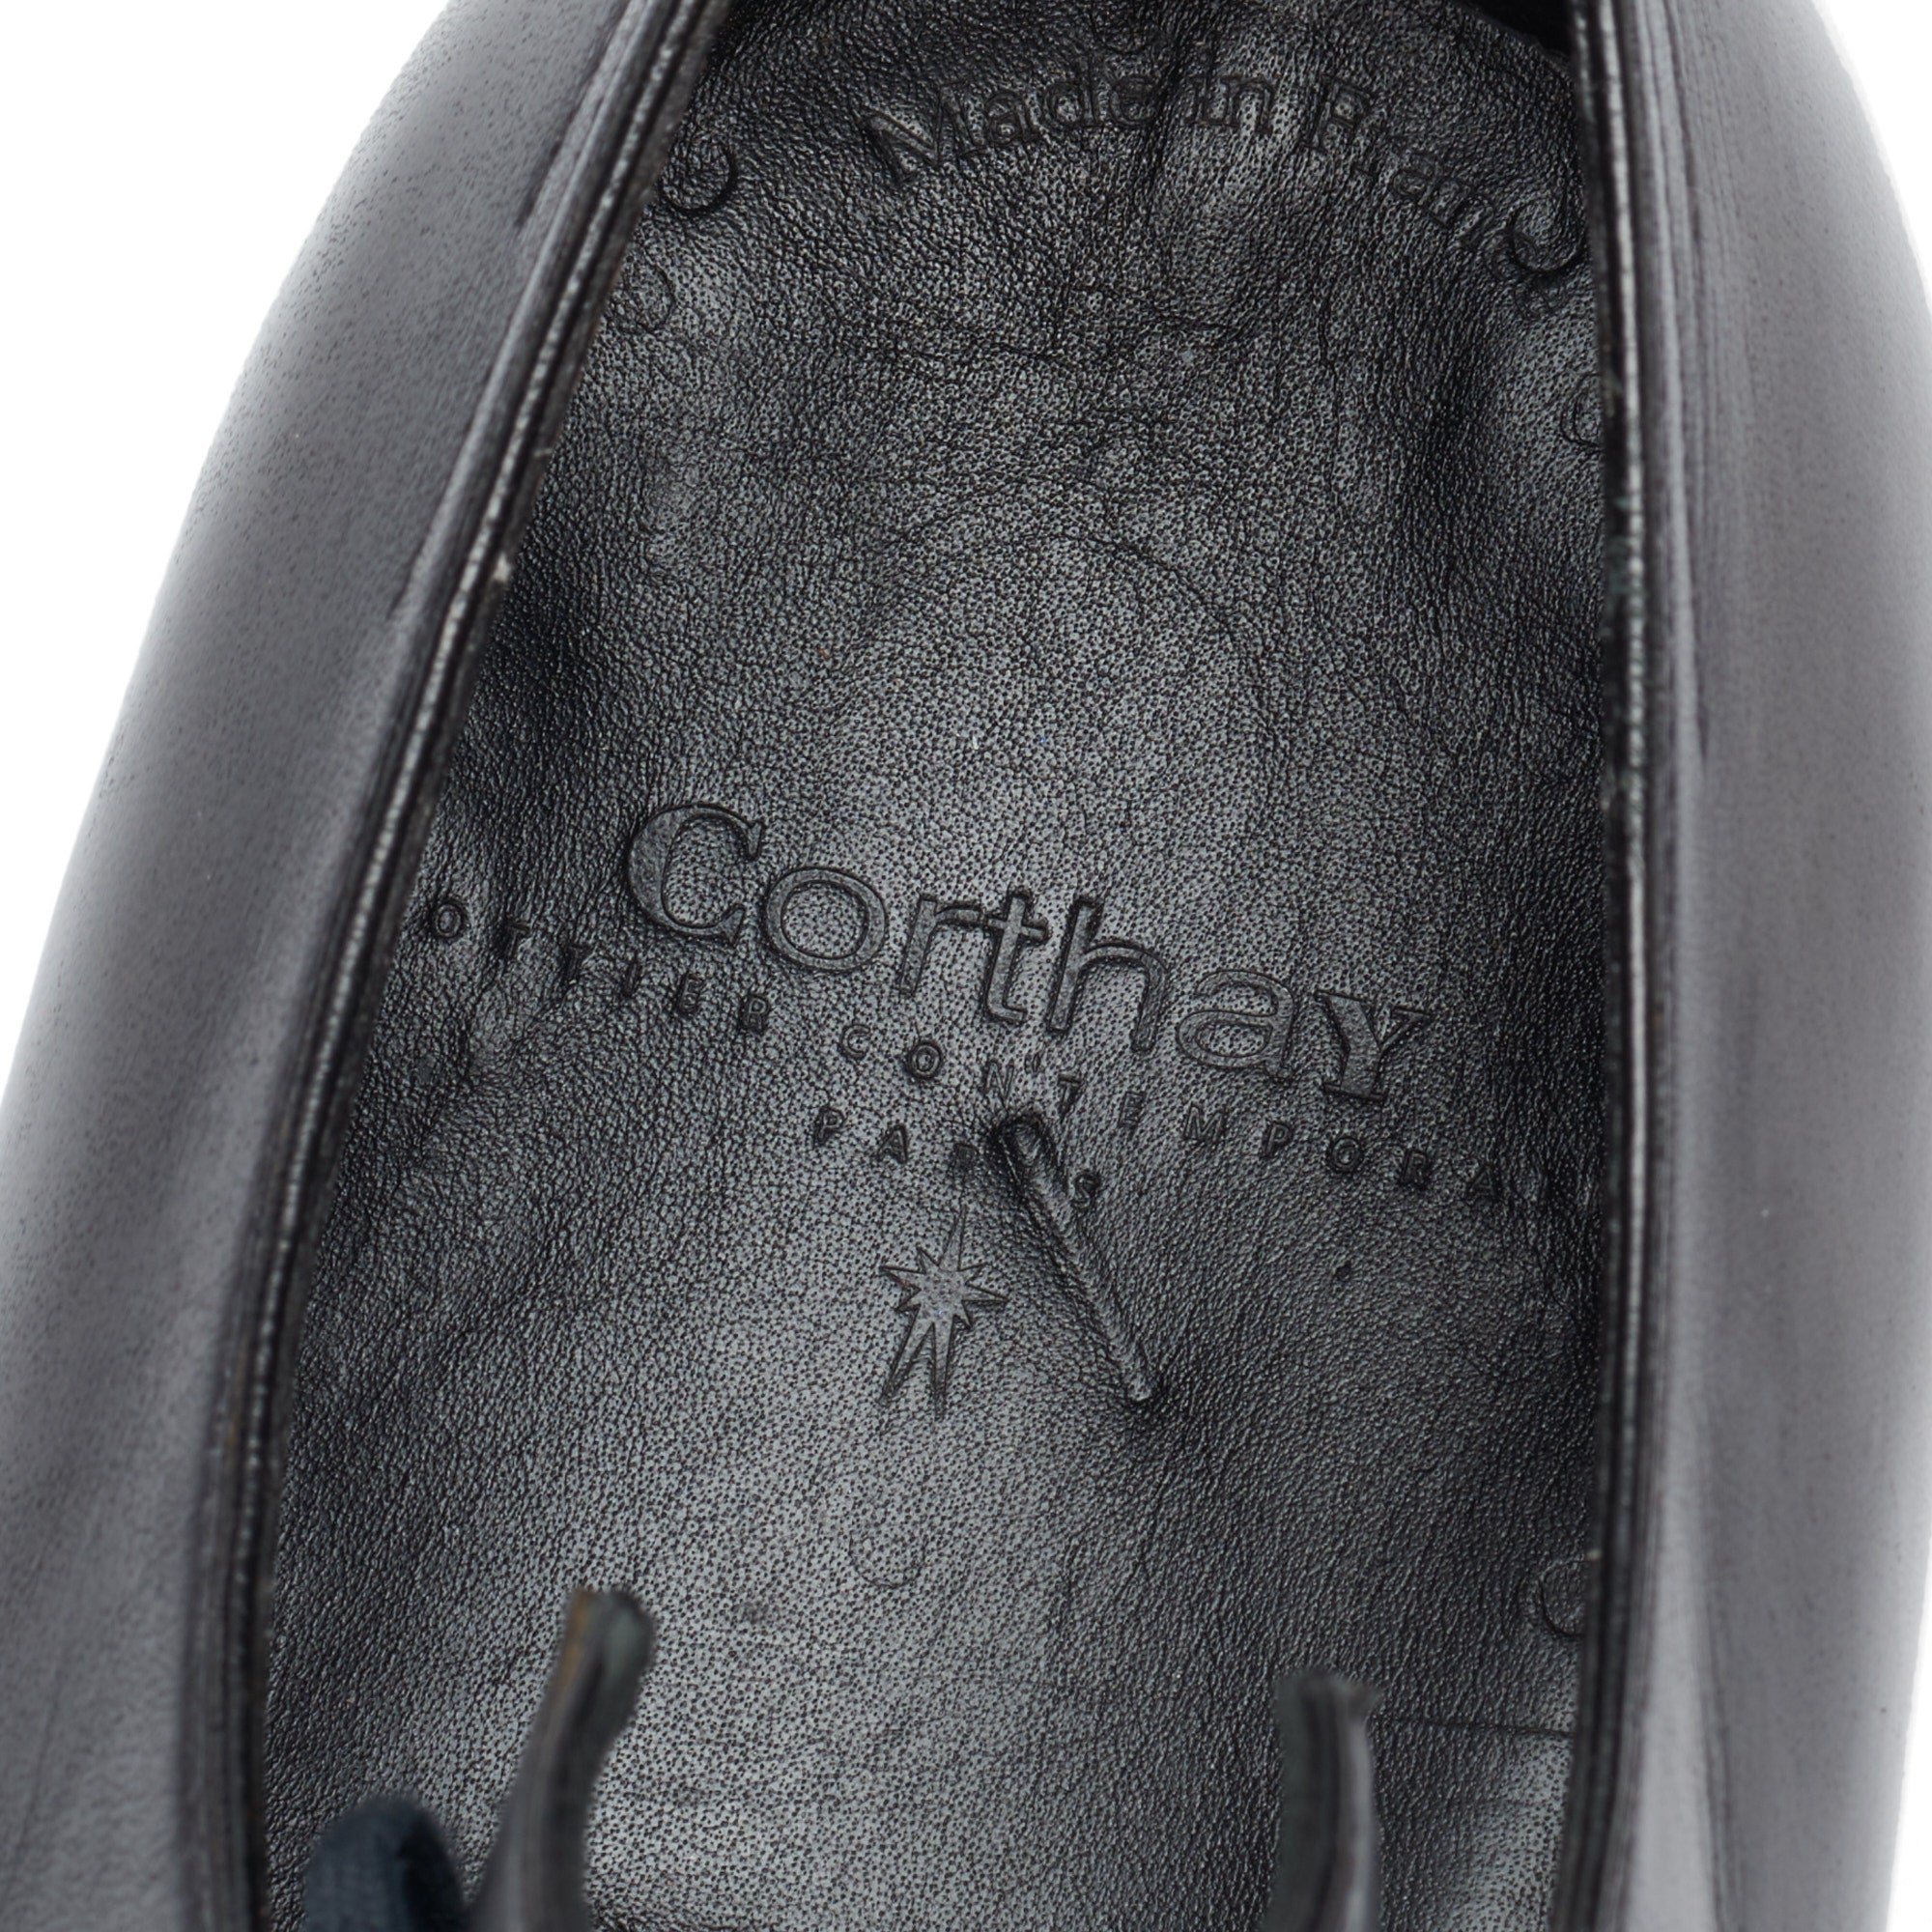 CORTHAY Paris "Arca" Gunmetal Calf Leather 2 Eyelet Derby Shoes 8.5 NEW CORTHAY